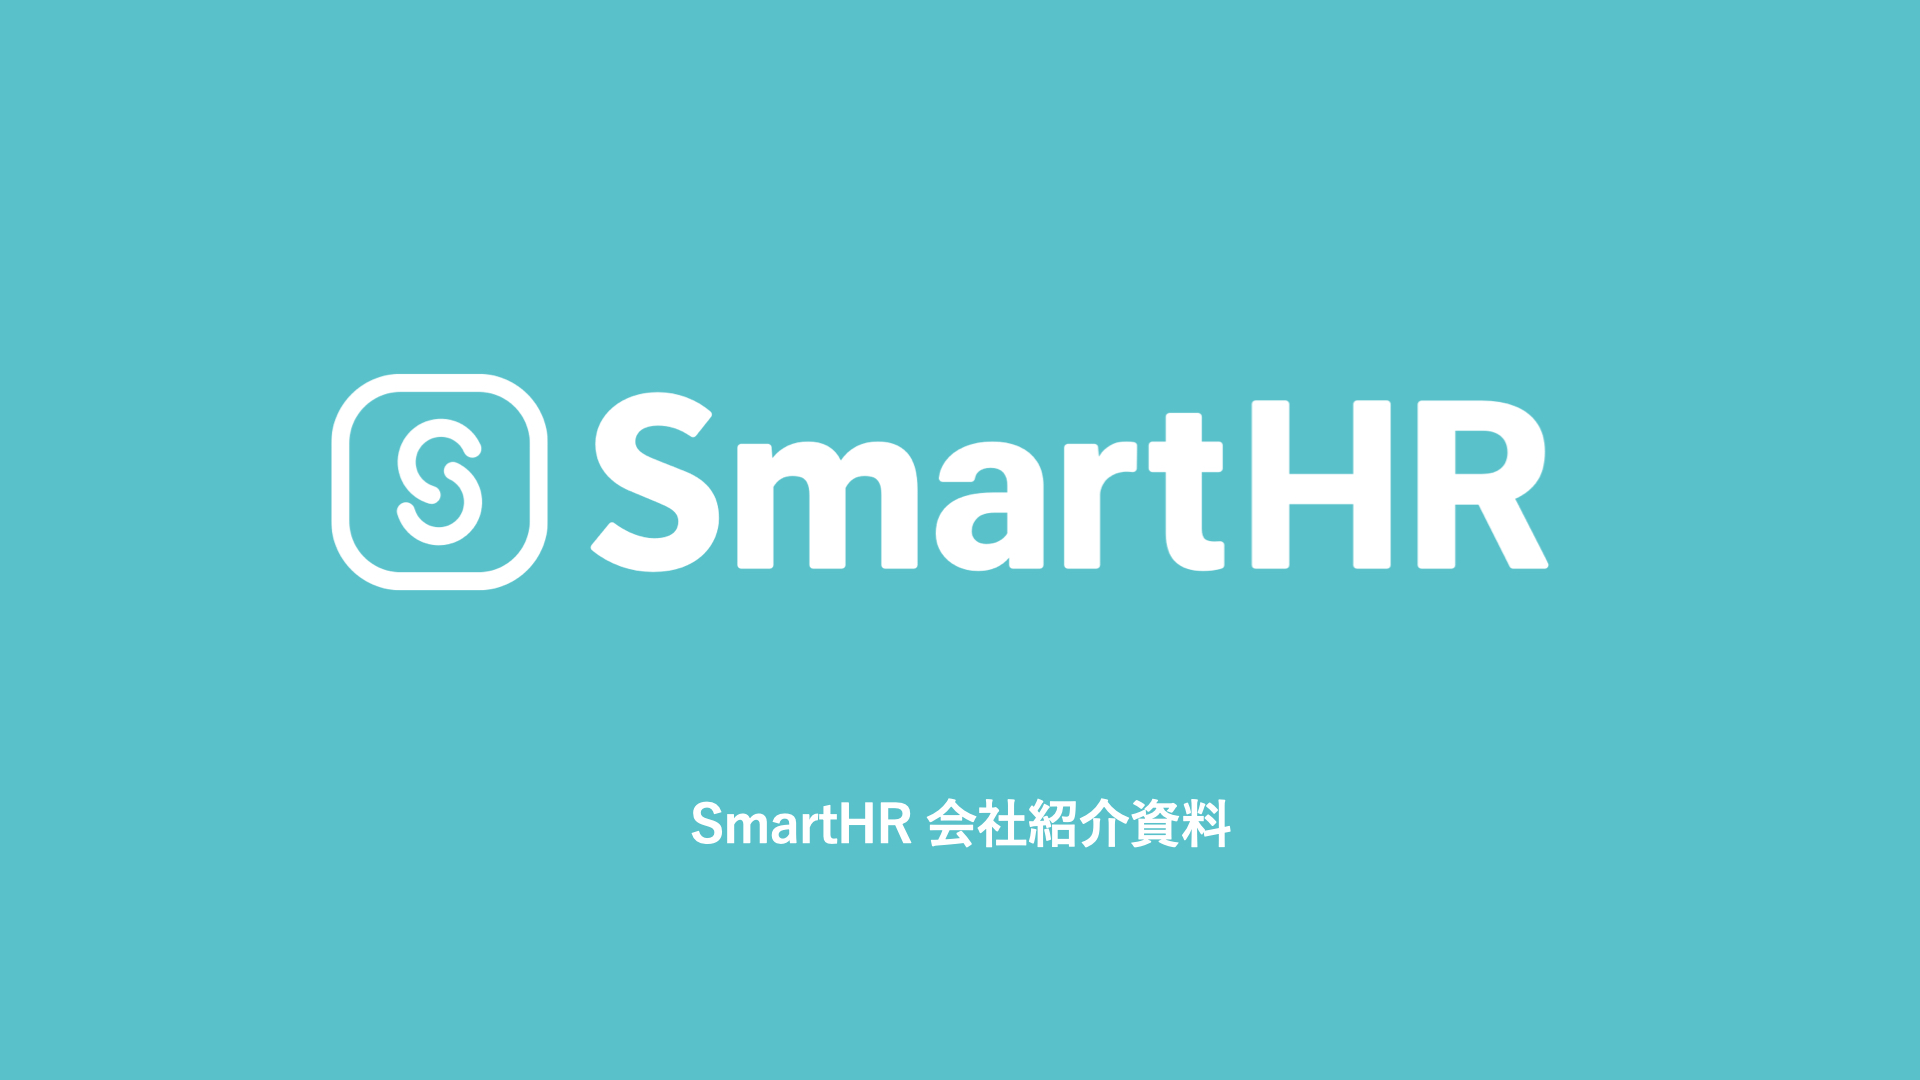 SmartHR会社紹介資料  / We are hiring